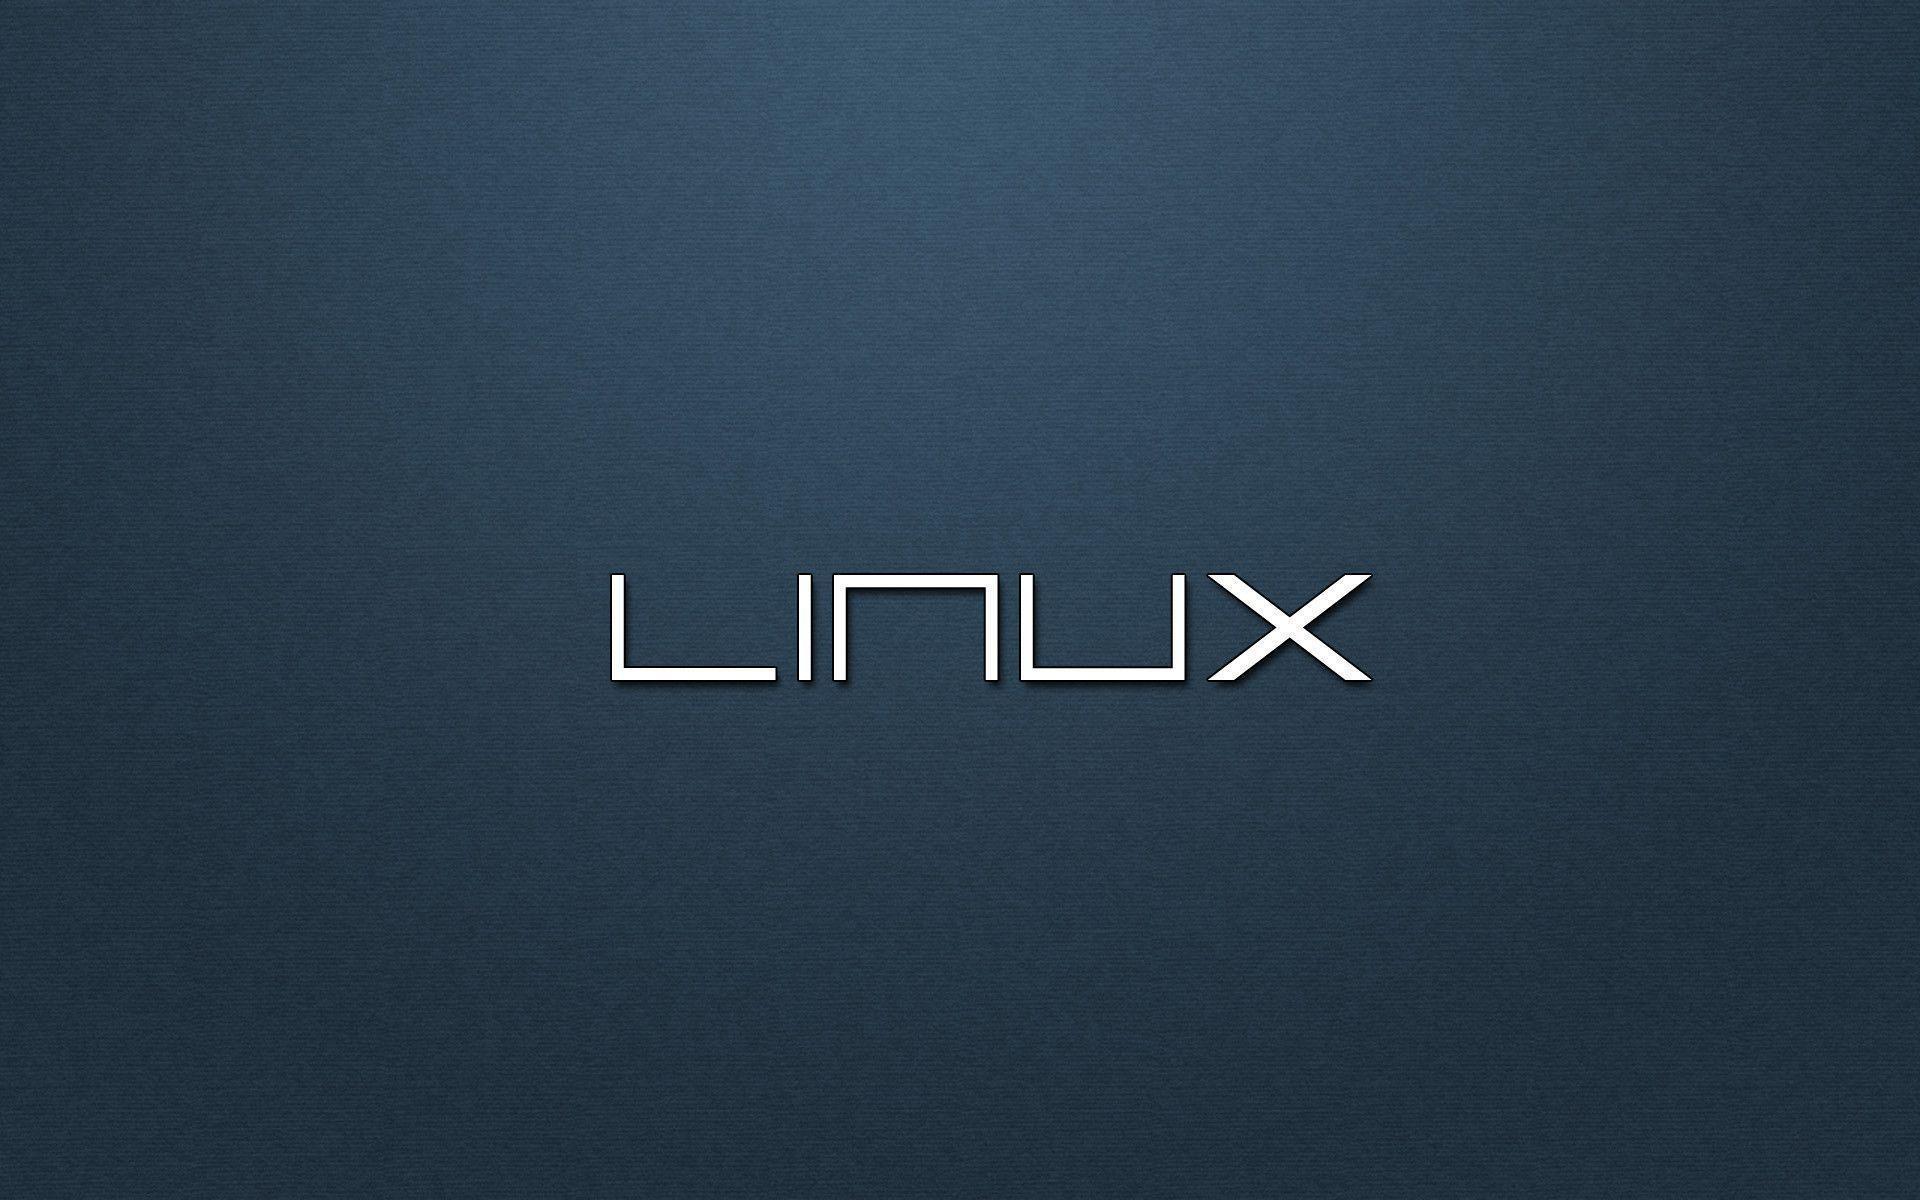 4peaks for linux